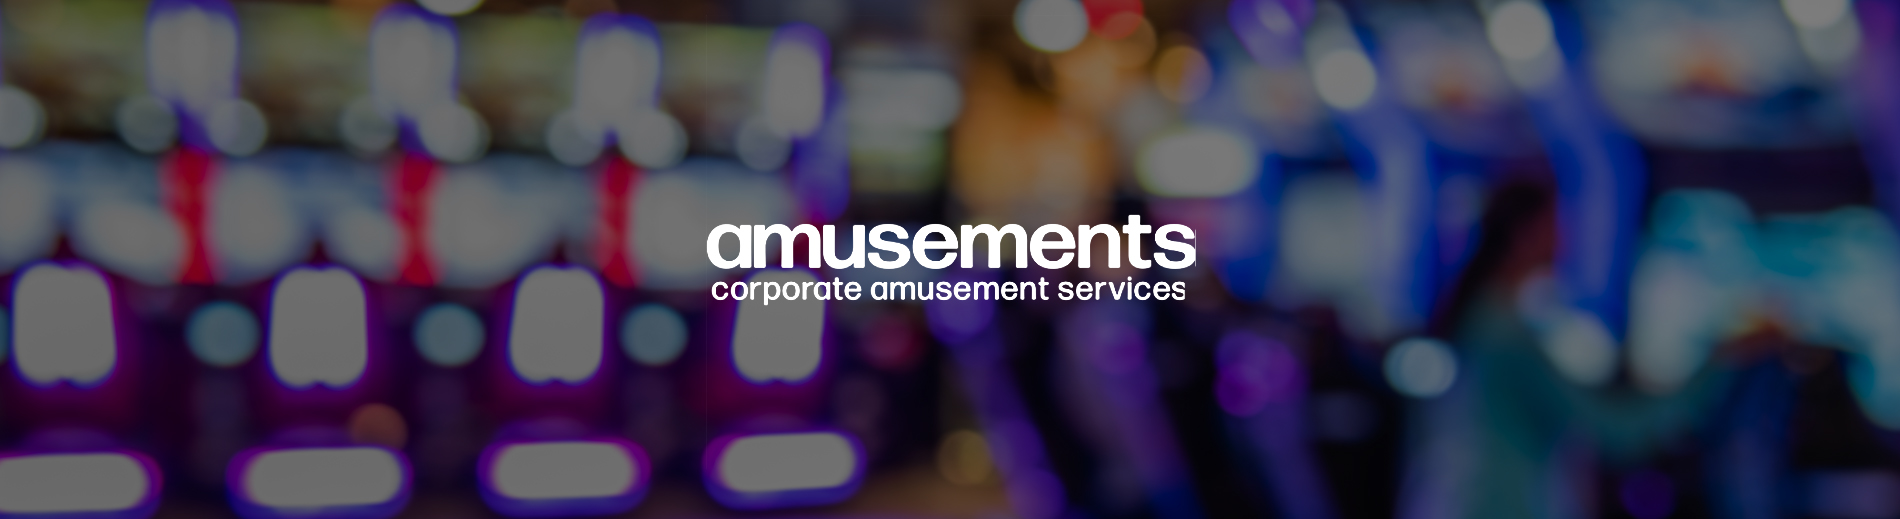 Amusements Case Study title image for ecommerce website design project